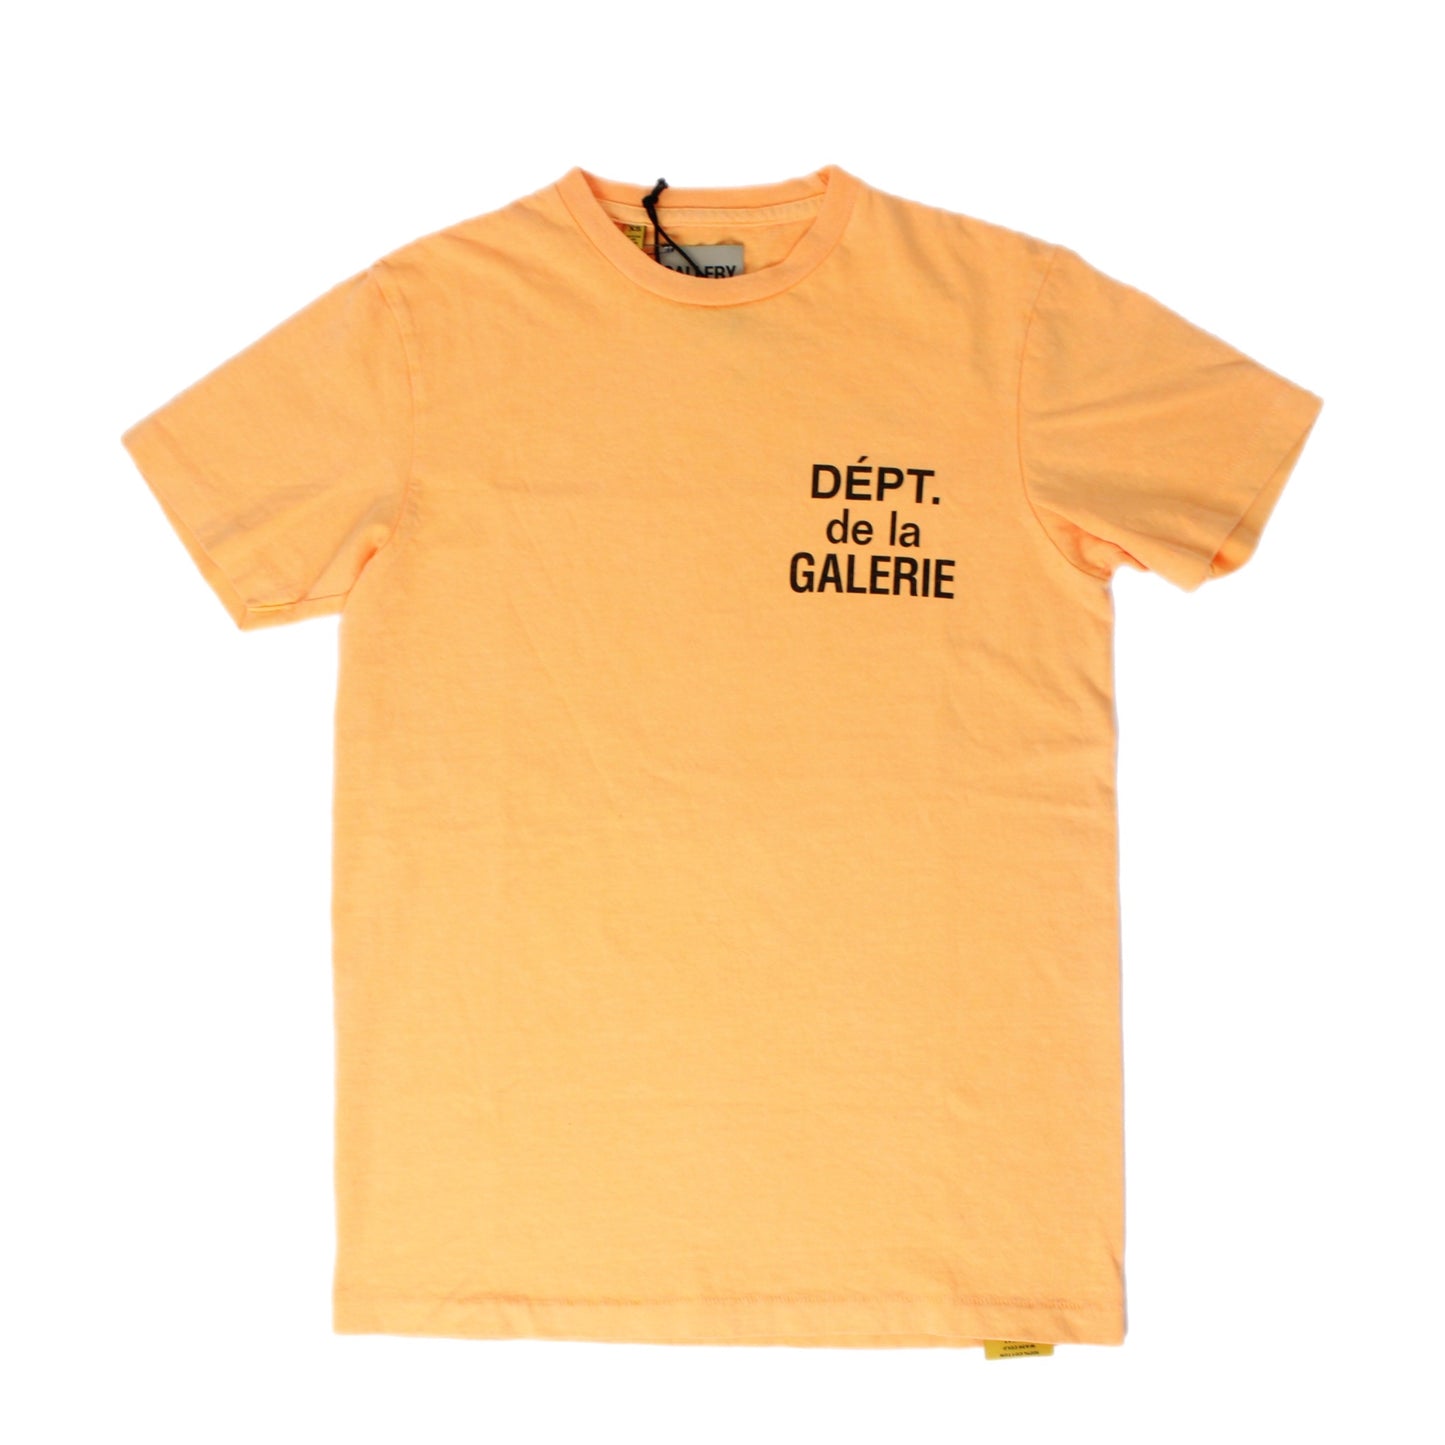 Gallery Dept. French T-Shirt Flo Orange